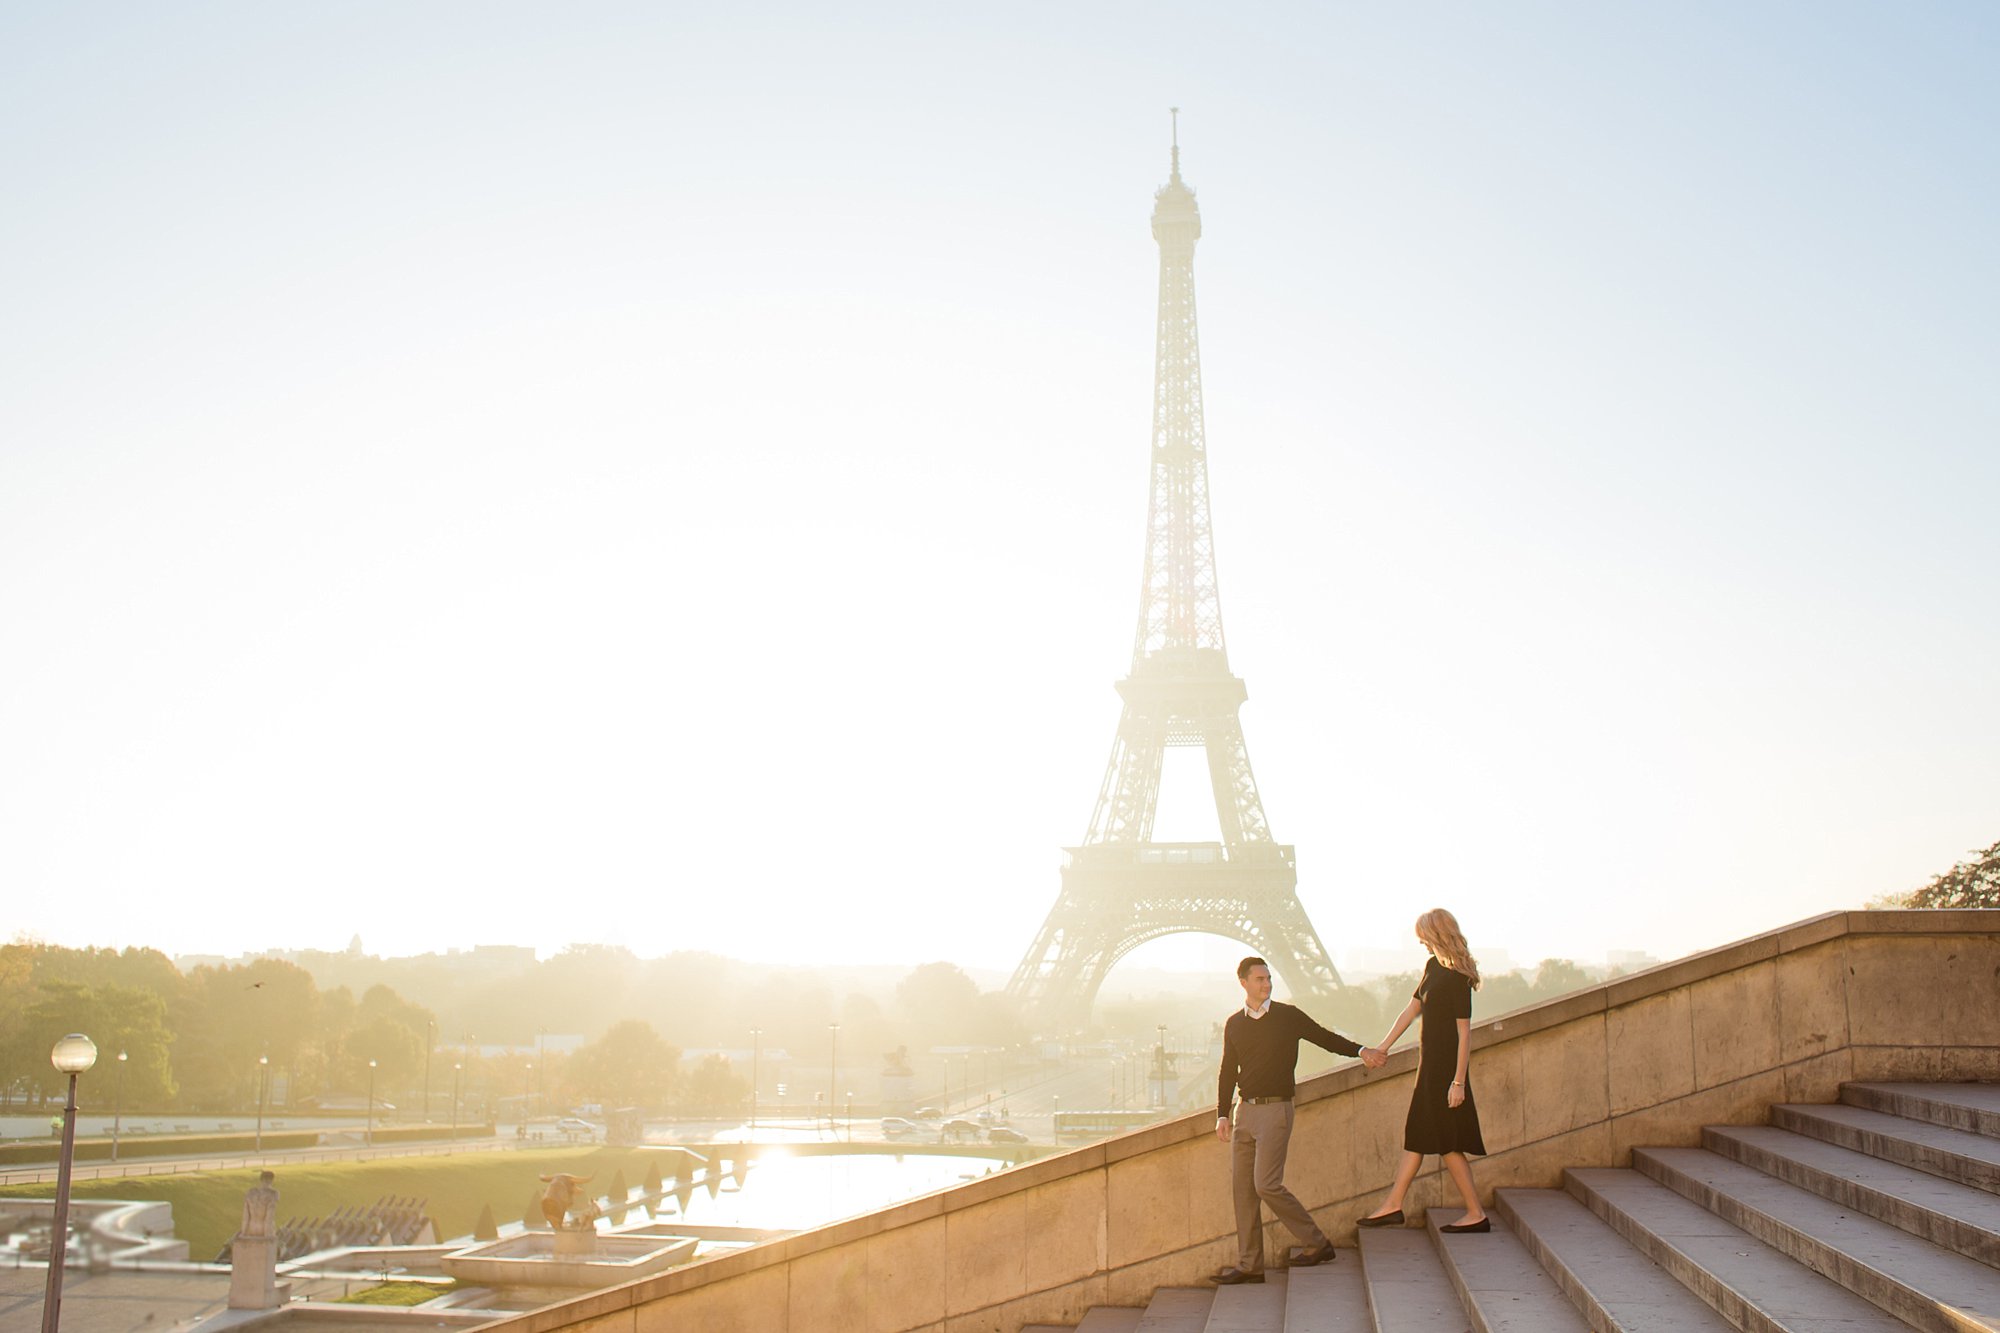 Eiffel Tower Paris Wedding Photography